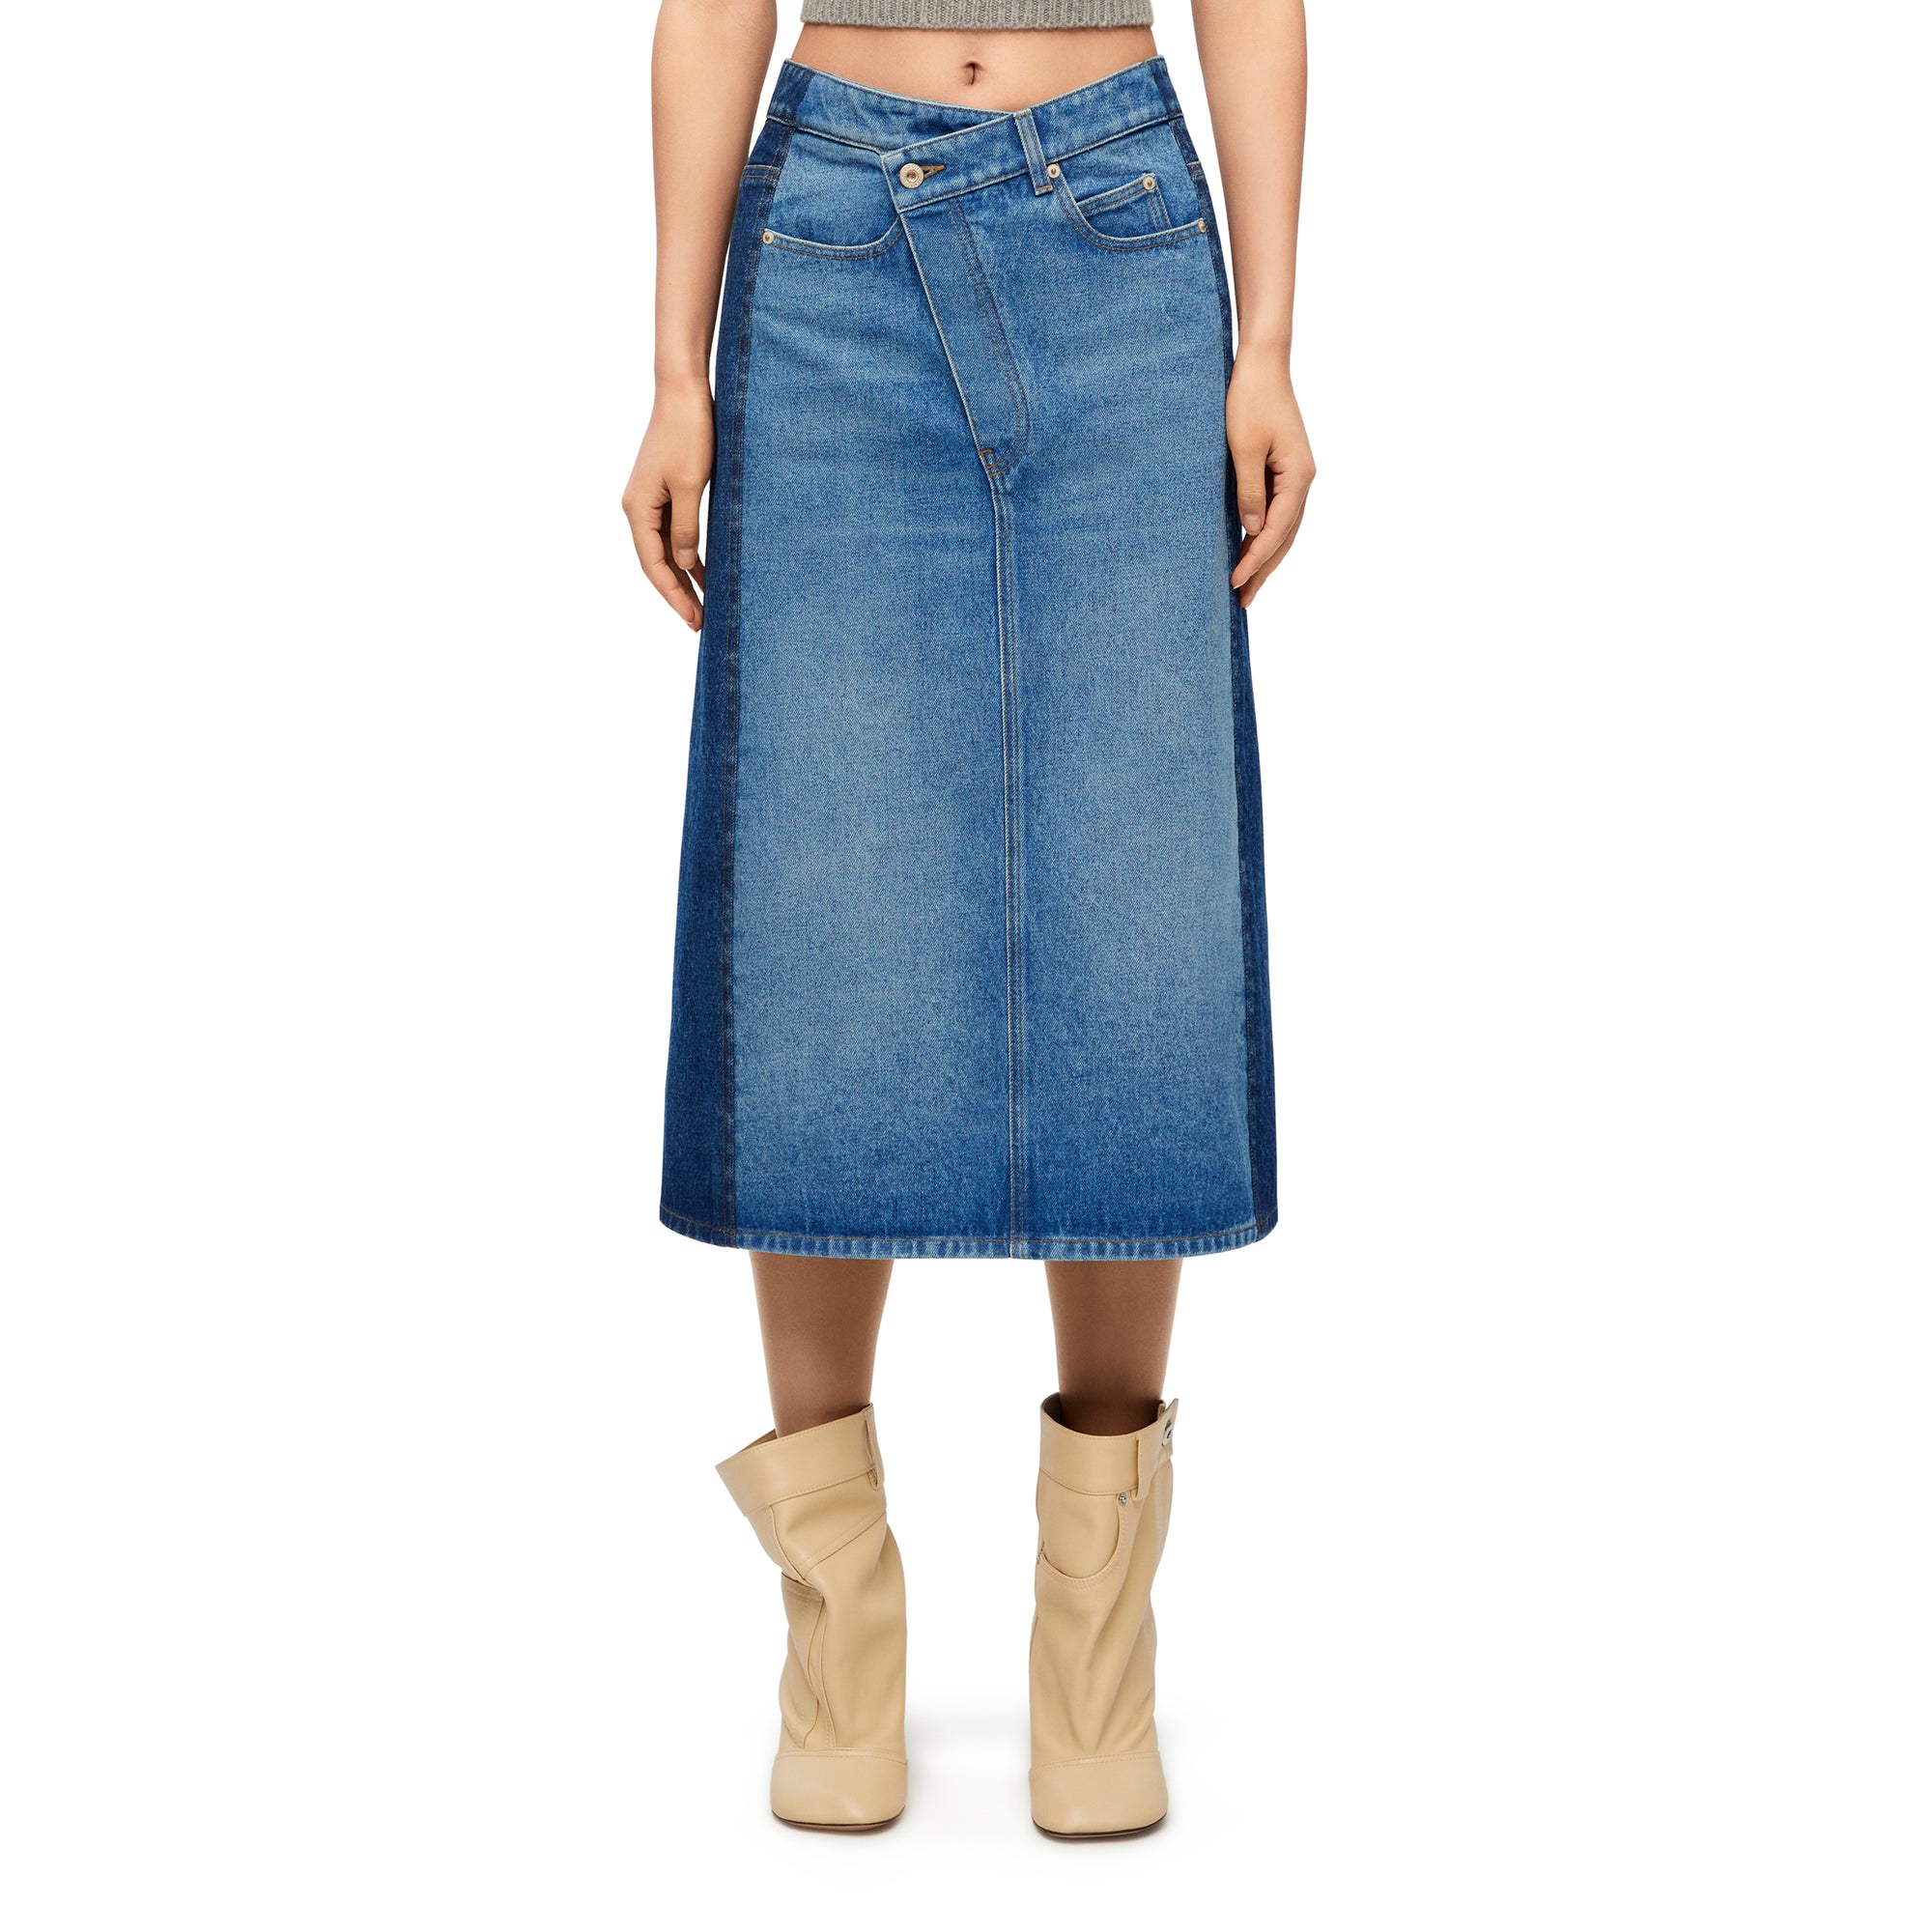 Loewe - Women’s Deconstructed Skirt - (Denim Blue) view 3